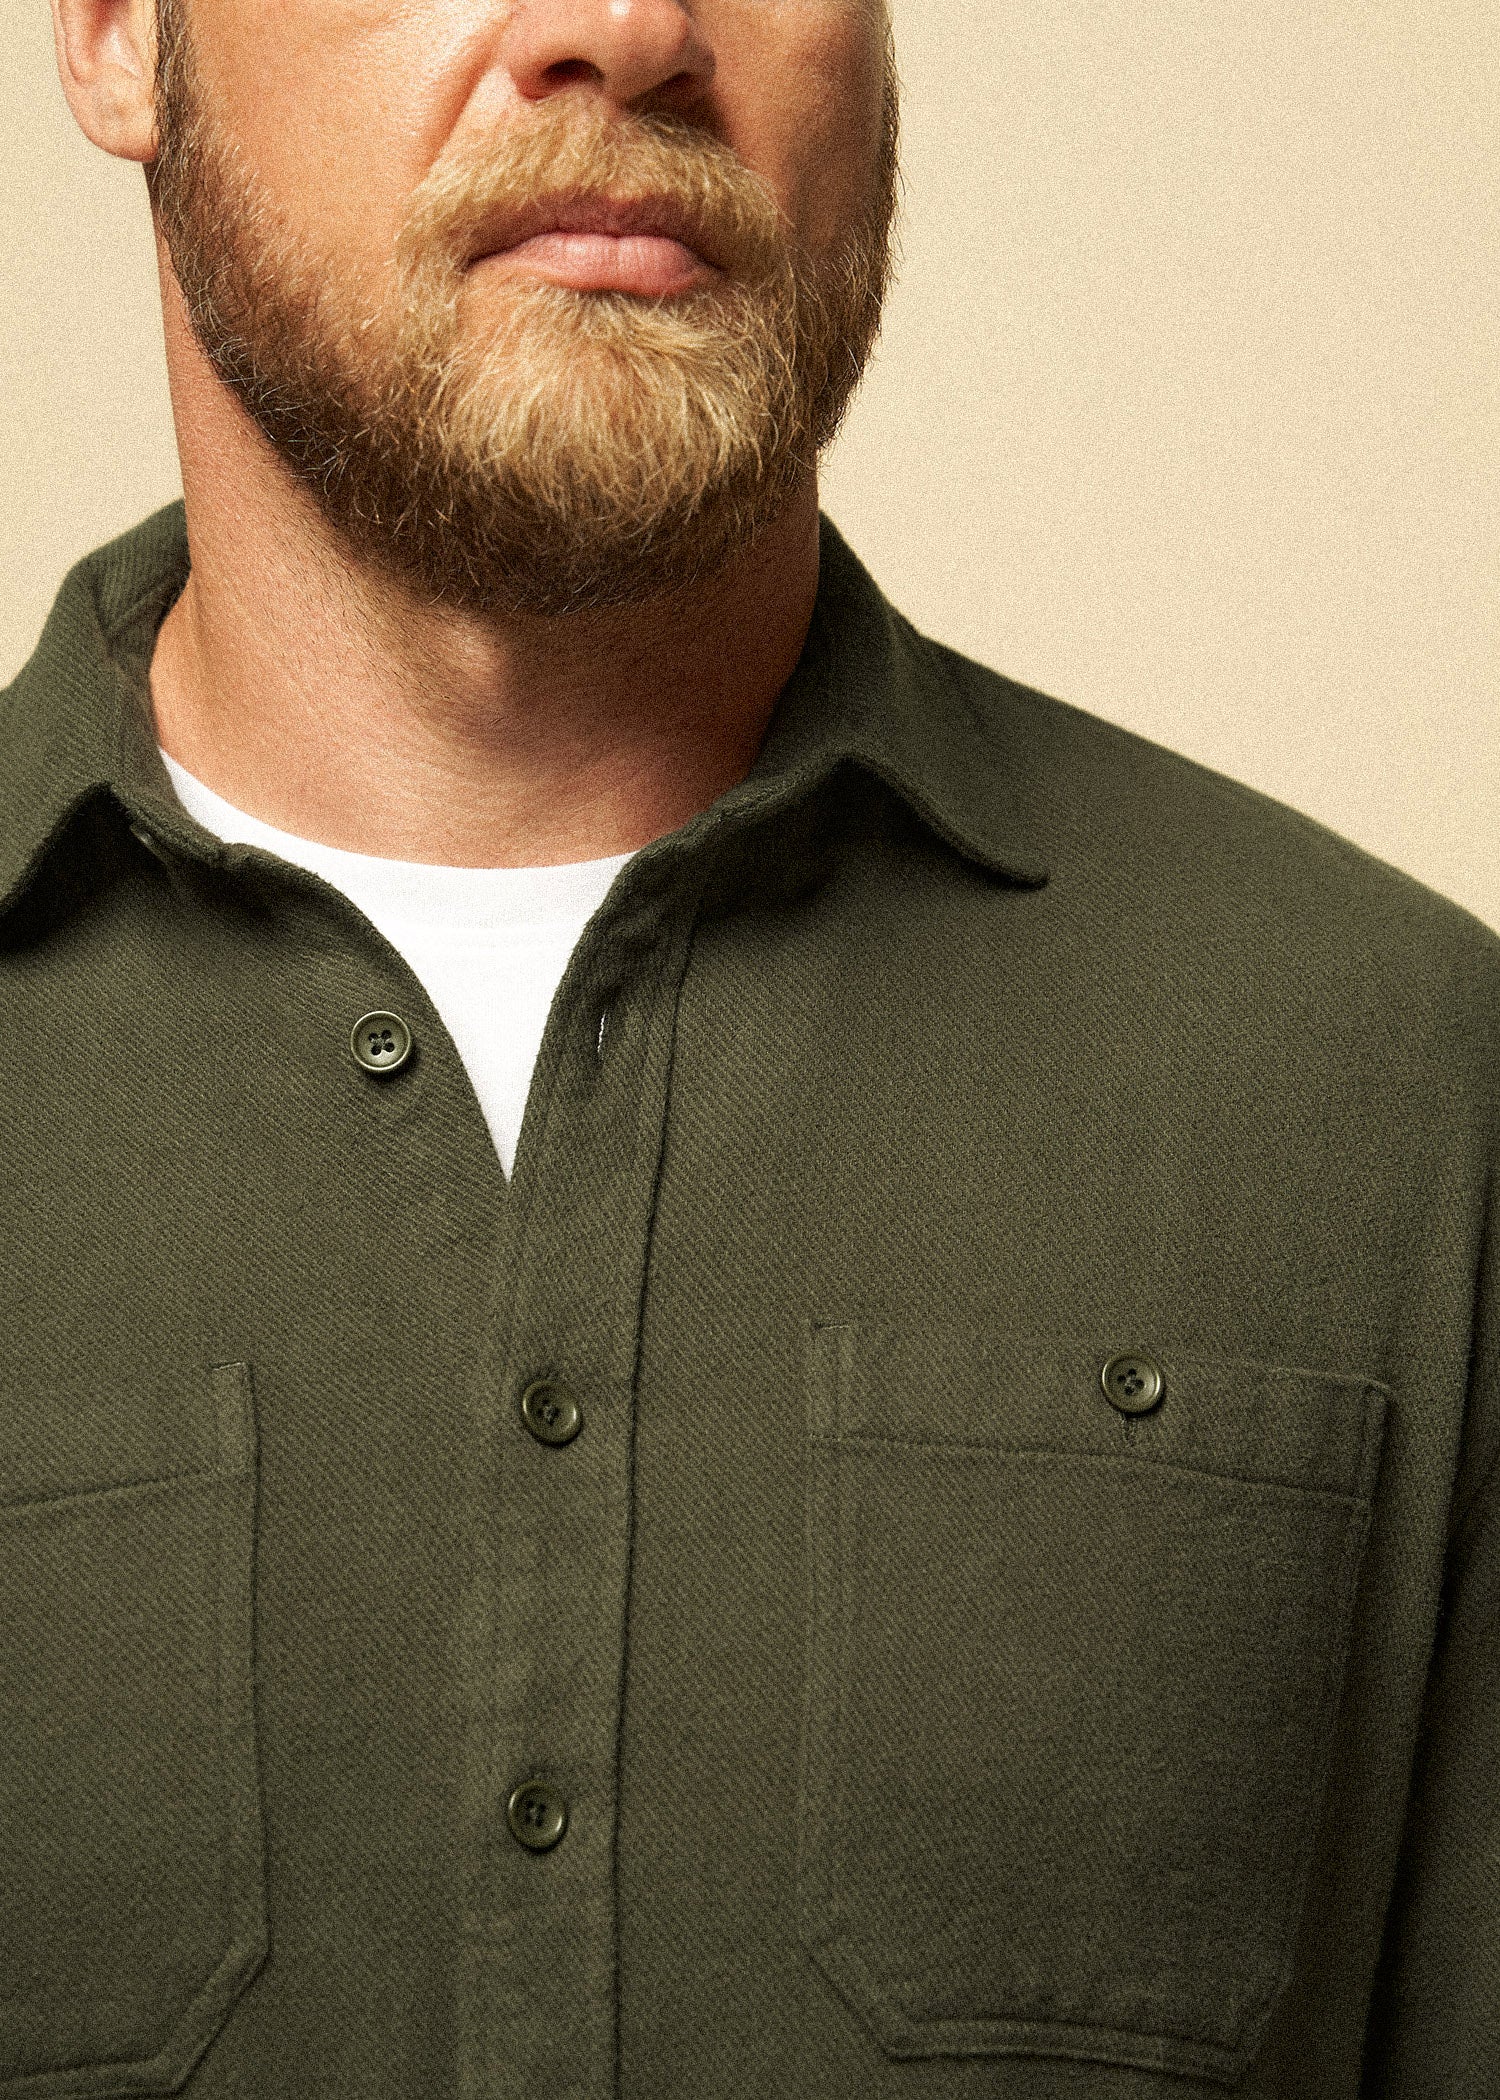 Men's Tall 2-Pocket Twill Button-Up Shirt in Black & Grey Plaid